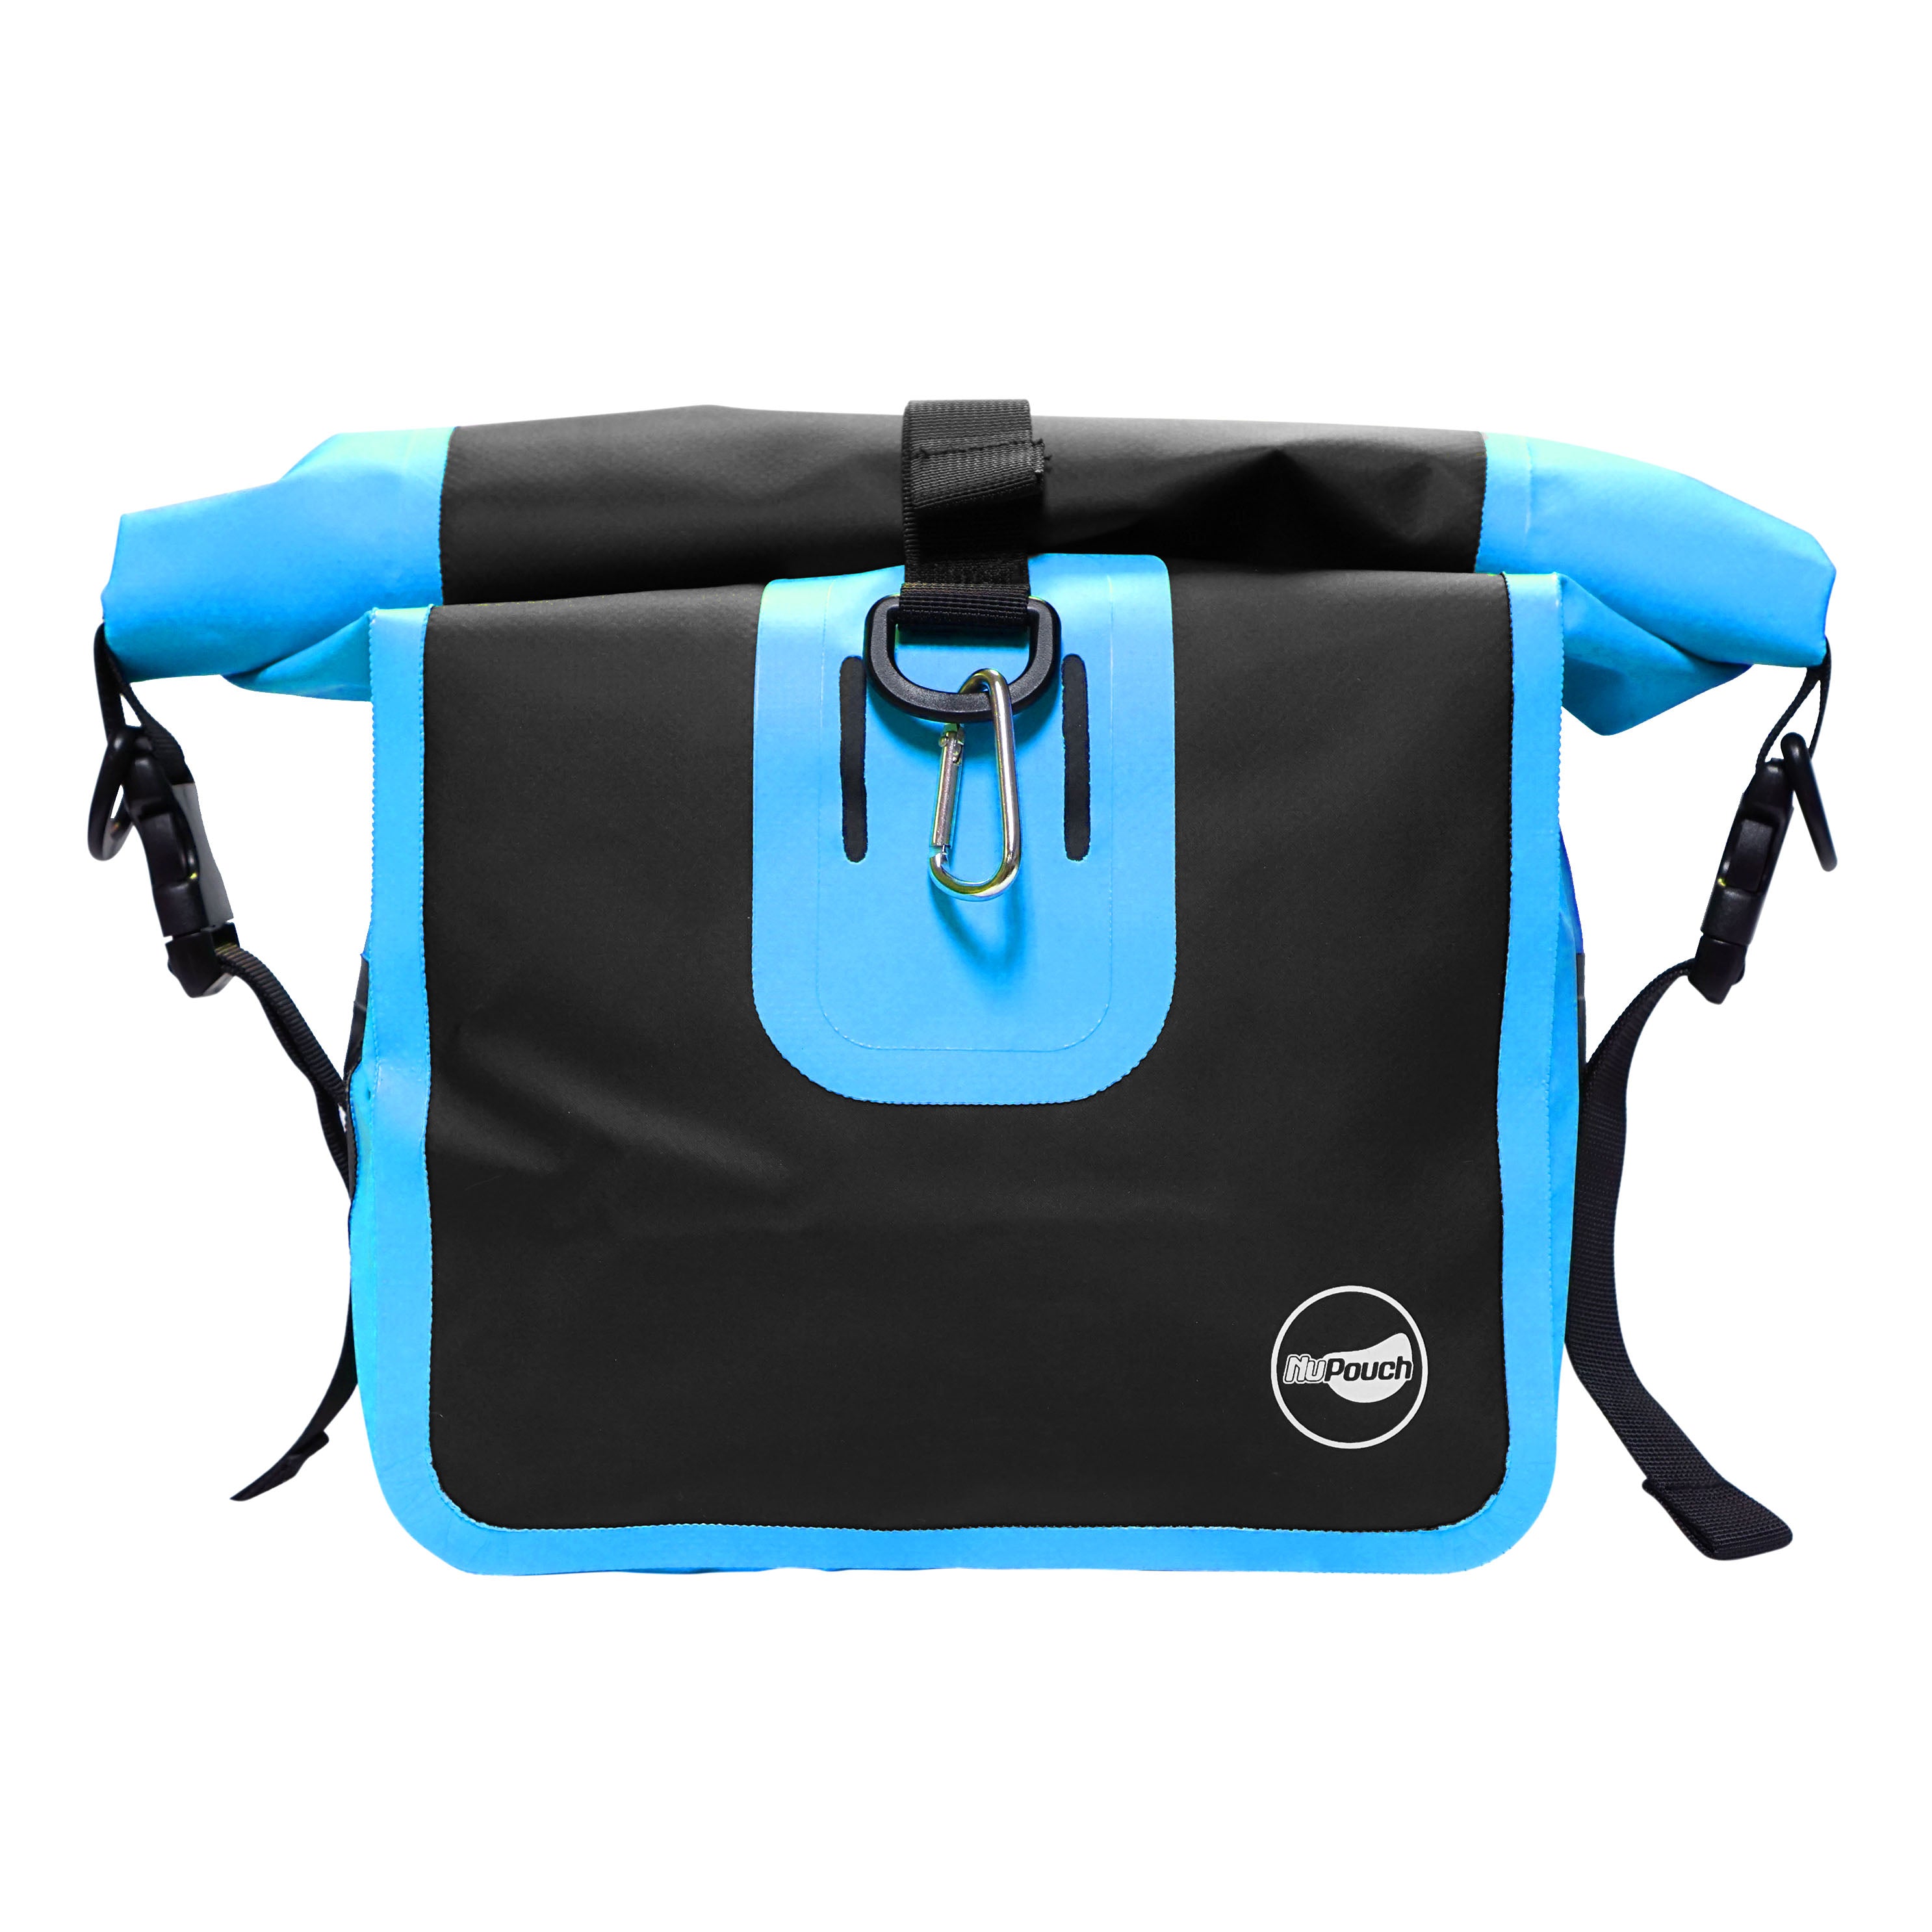 Spläsh Crossbody Bag - Waterproof, Sustainable, Chic